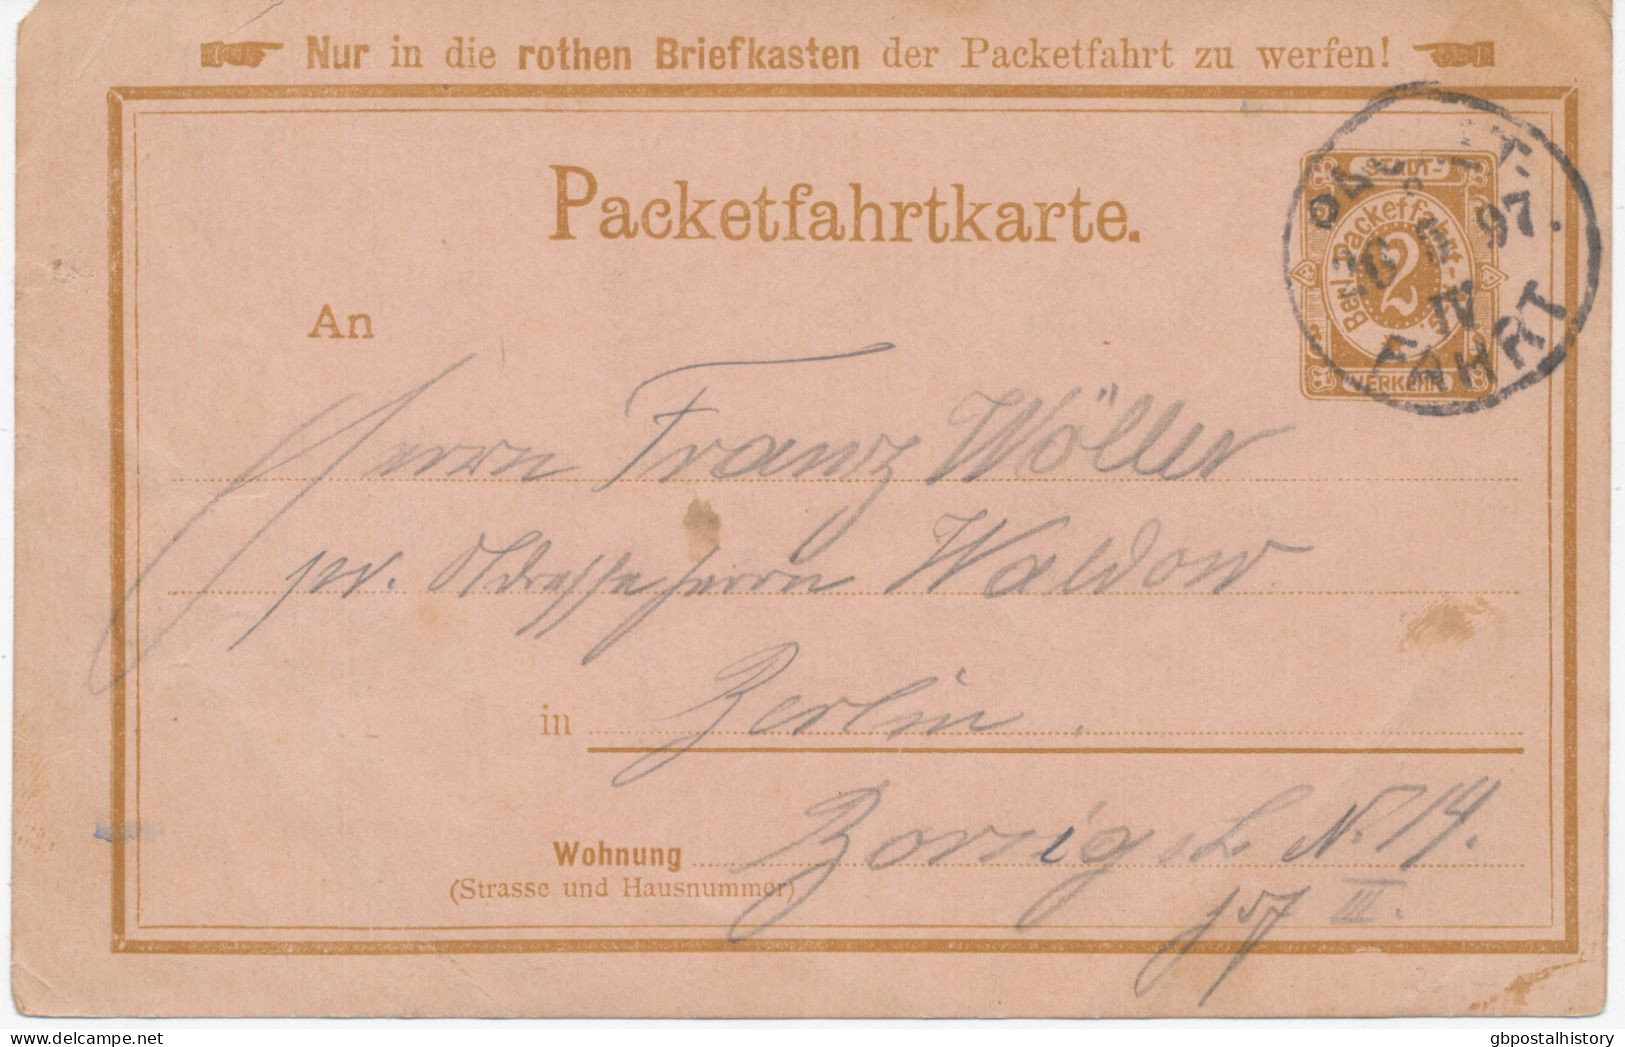 BERLIN 1897 BERLIN Packetfahrtkarte 2 Pf GA-Postkarte Der Beliner Packertfahrt AG Mit K1 „PACKET-FAHRT“, Selten - Private Postcards - Used